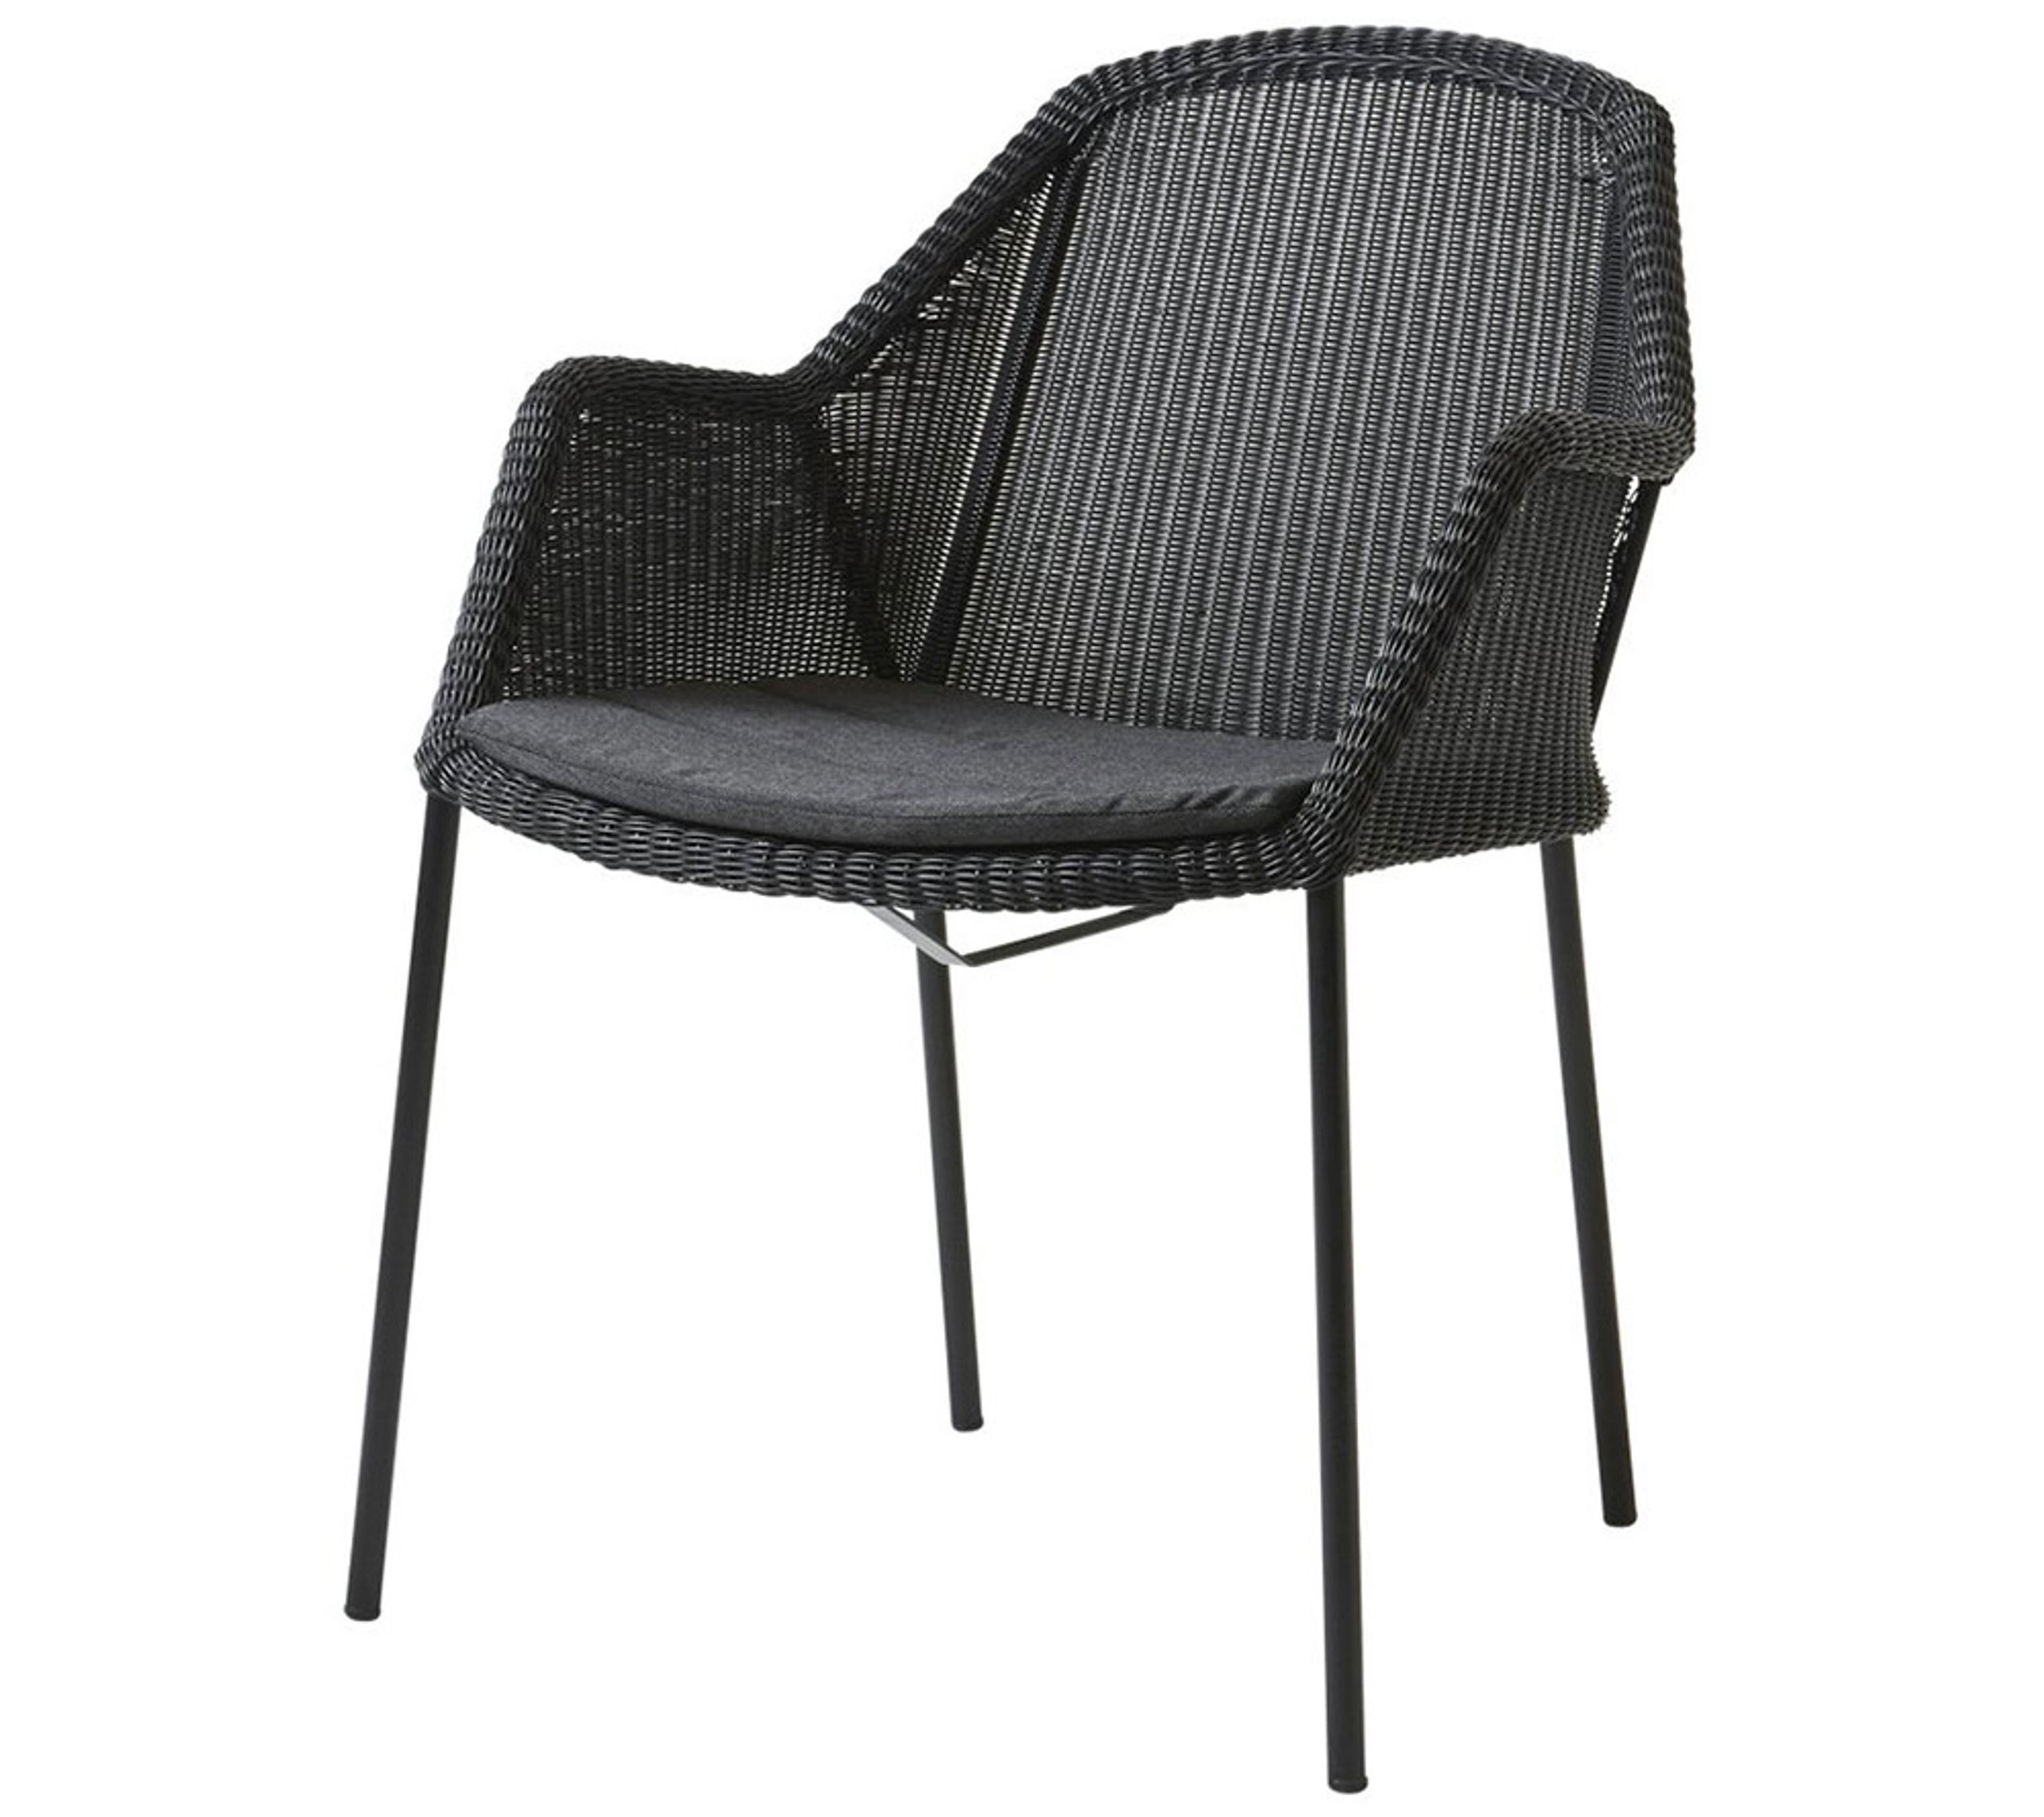 Cane-line - Almofada - Breeze Chair Cushion - Black - Cane-line Natté